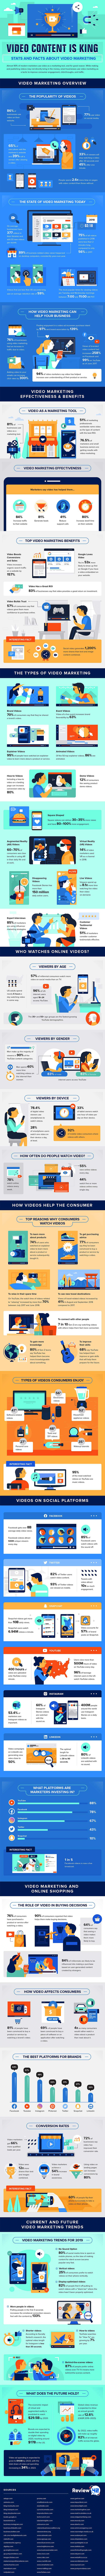 Video-Marketing-Statistics-infographic